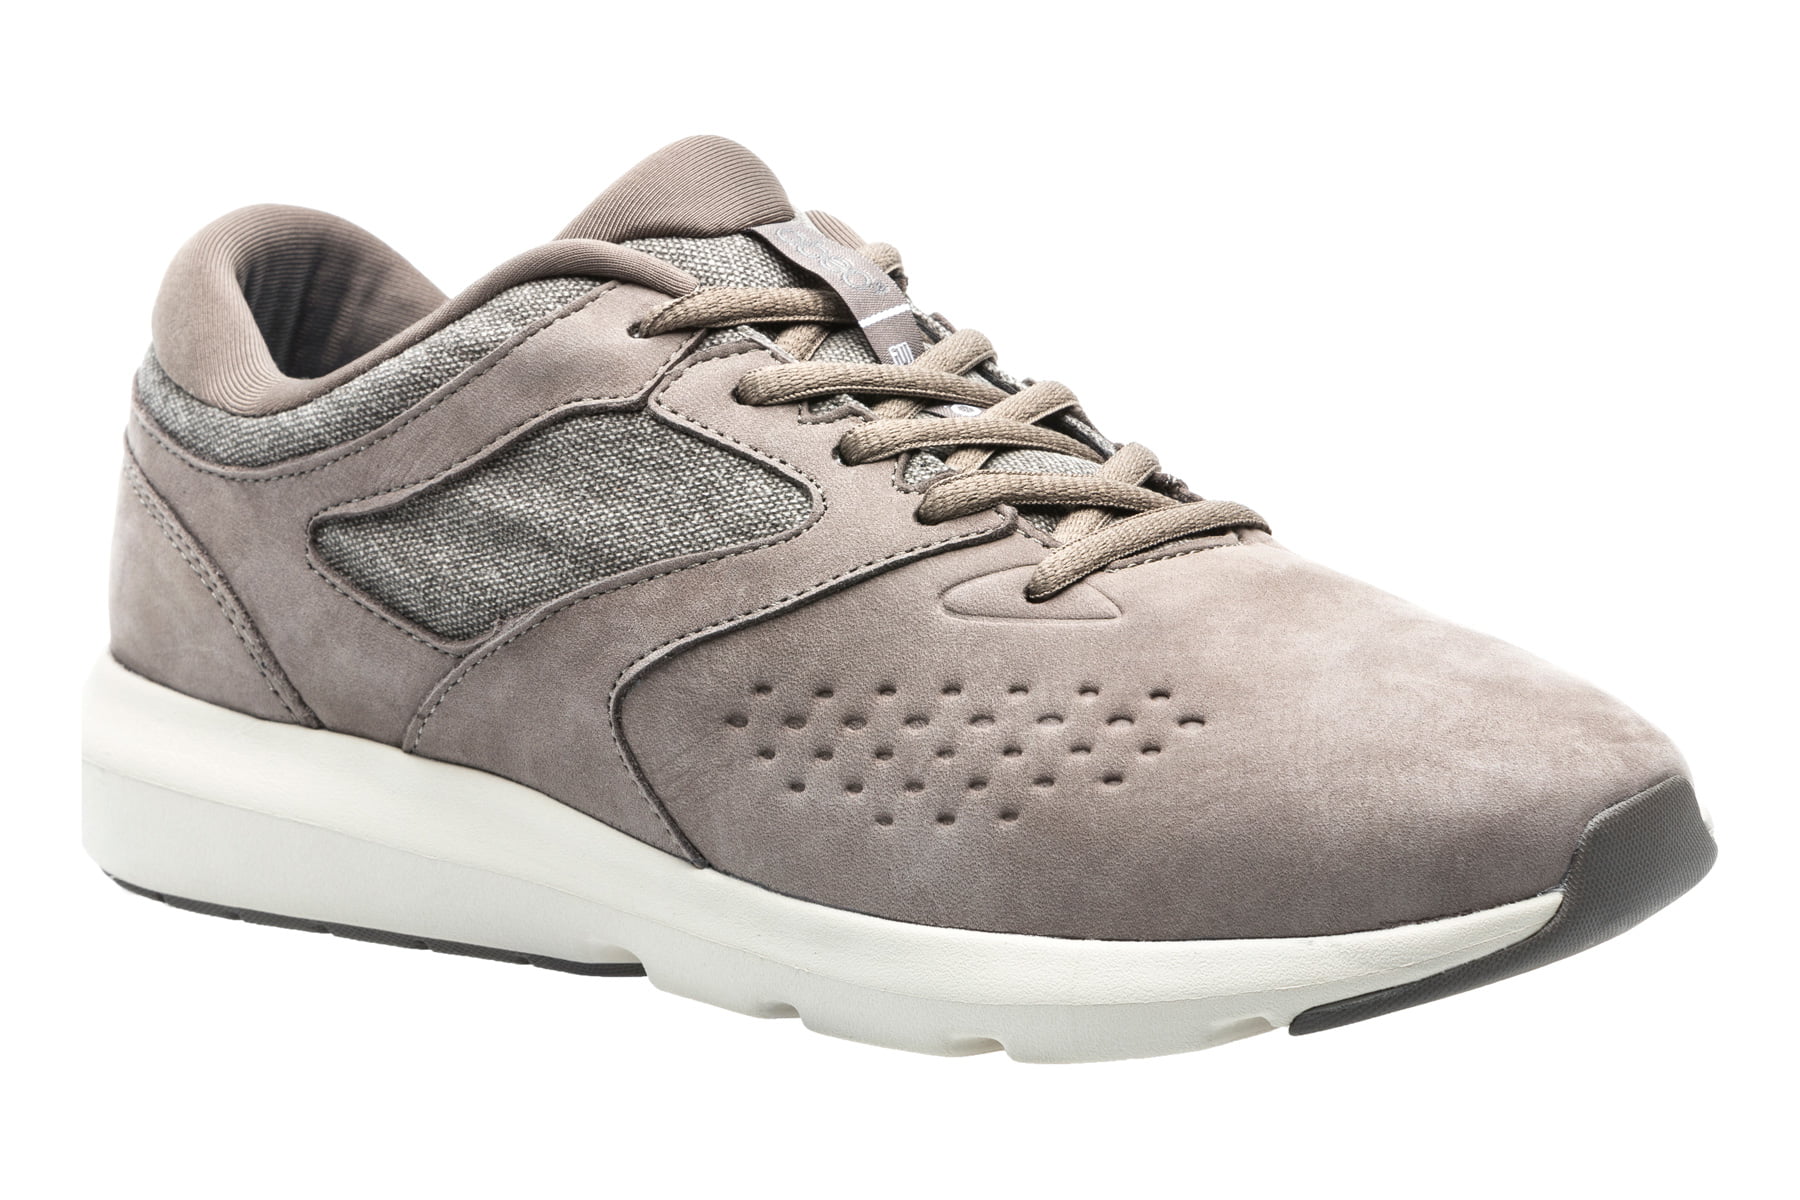 ABEO Footwear - ABEO Men's Experience - Athletic Shoes in Grey ...